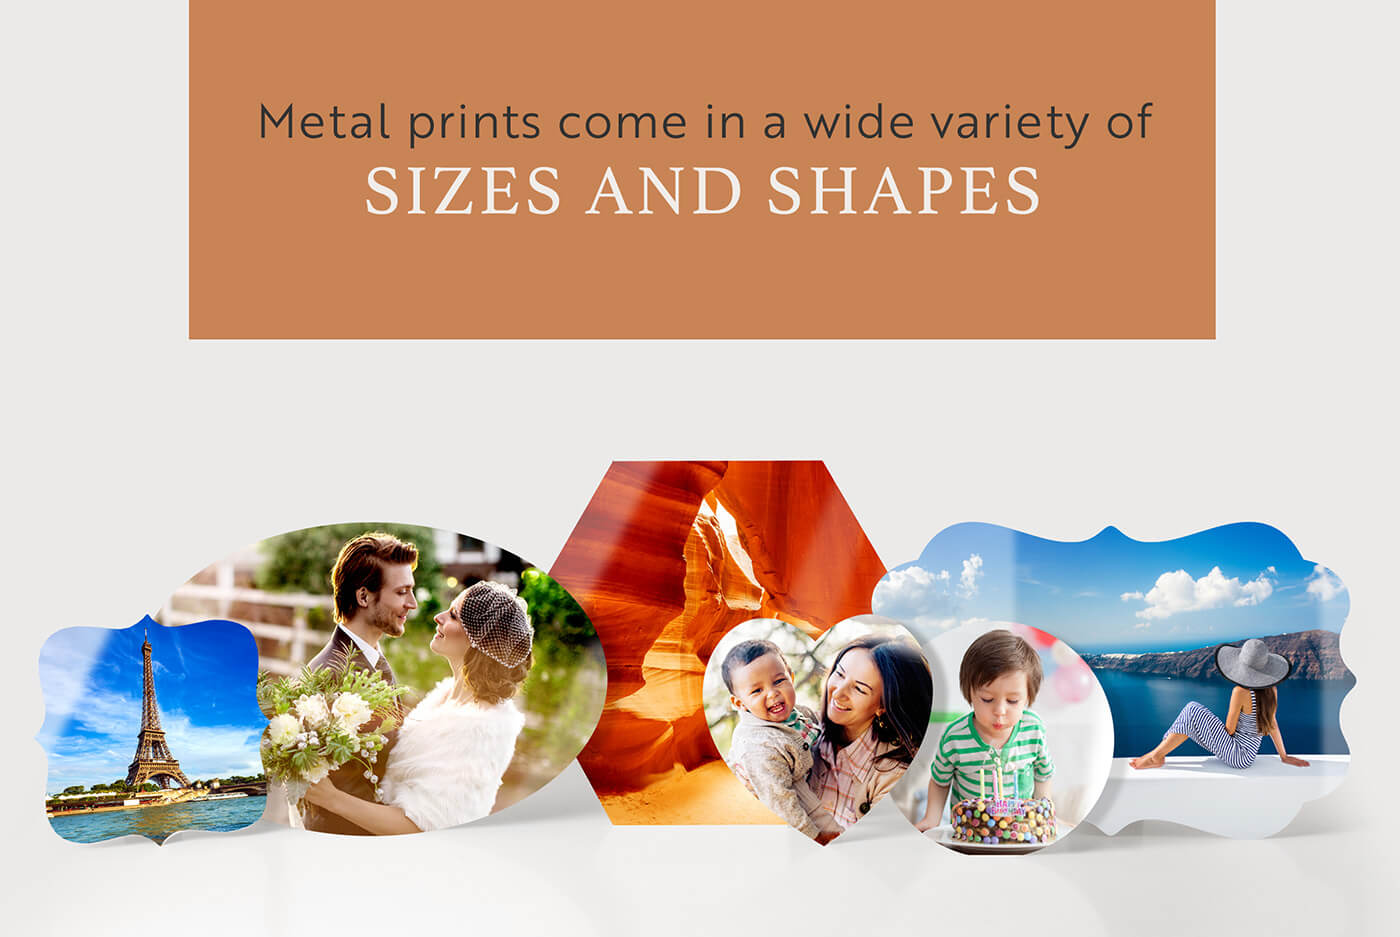 Metal Print Size and Shape